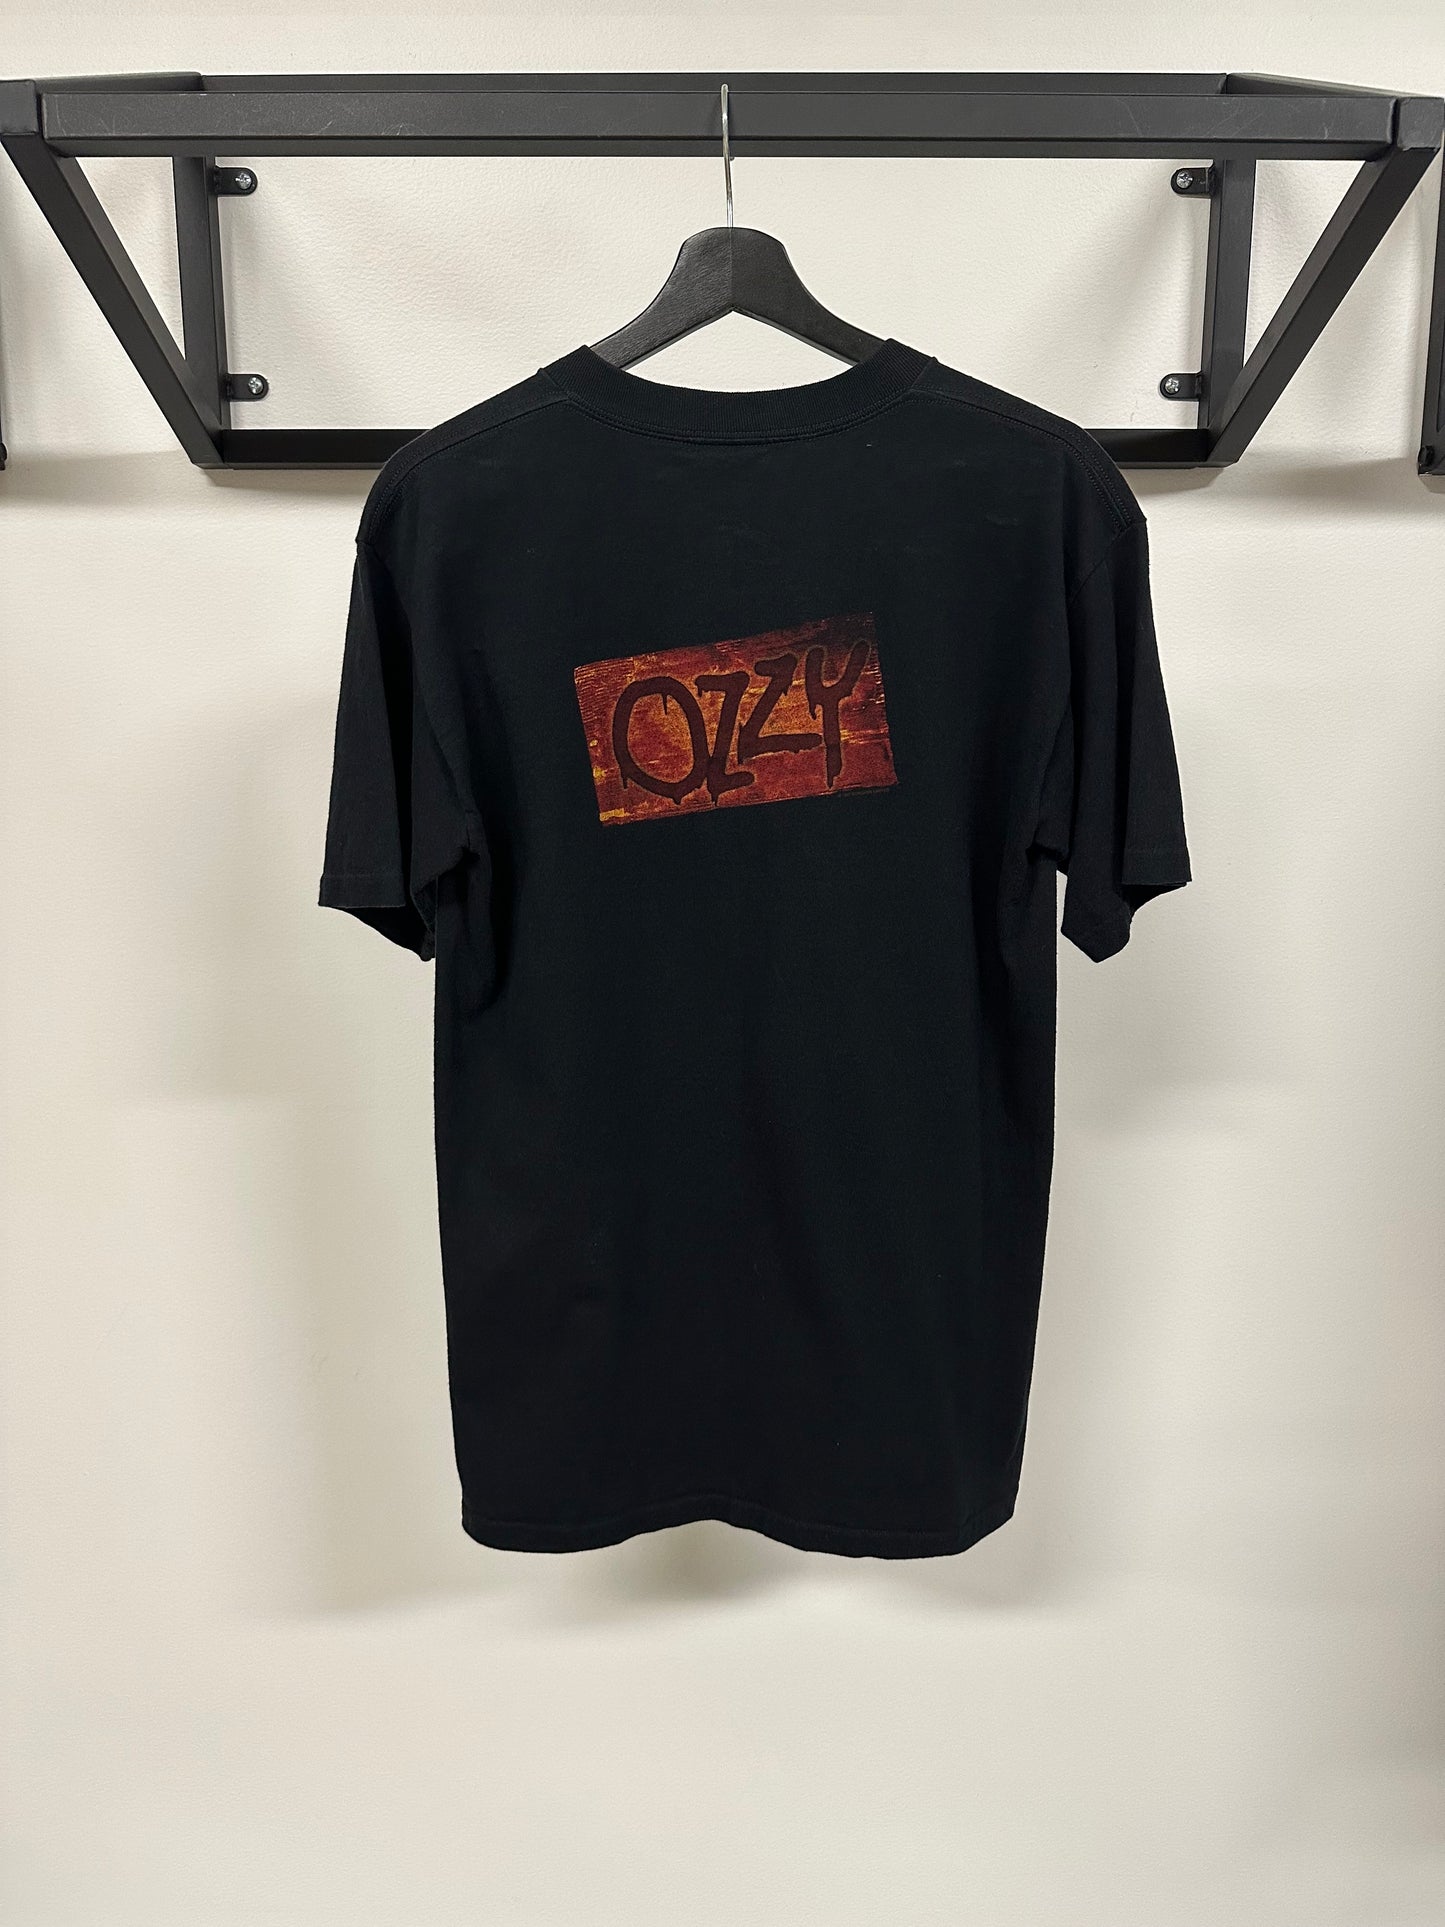 Vintage Ozzy Osborne shirt Medium